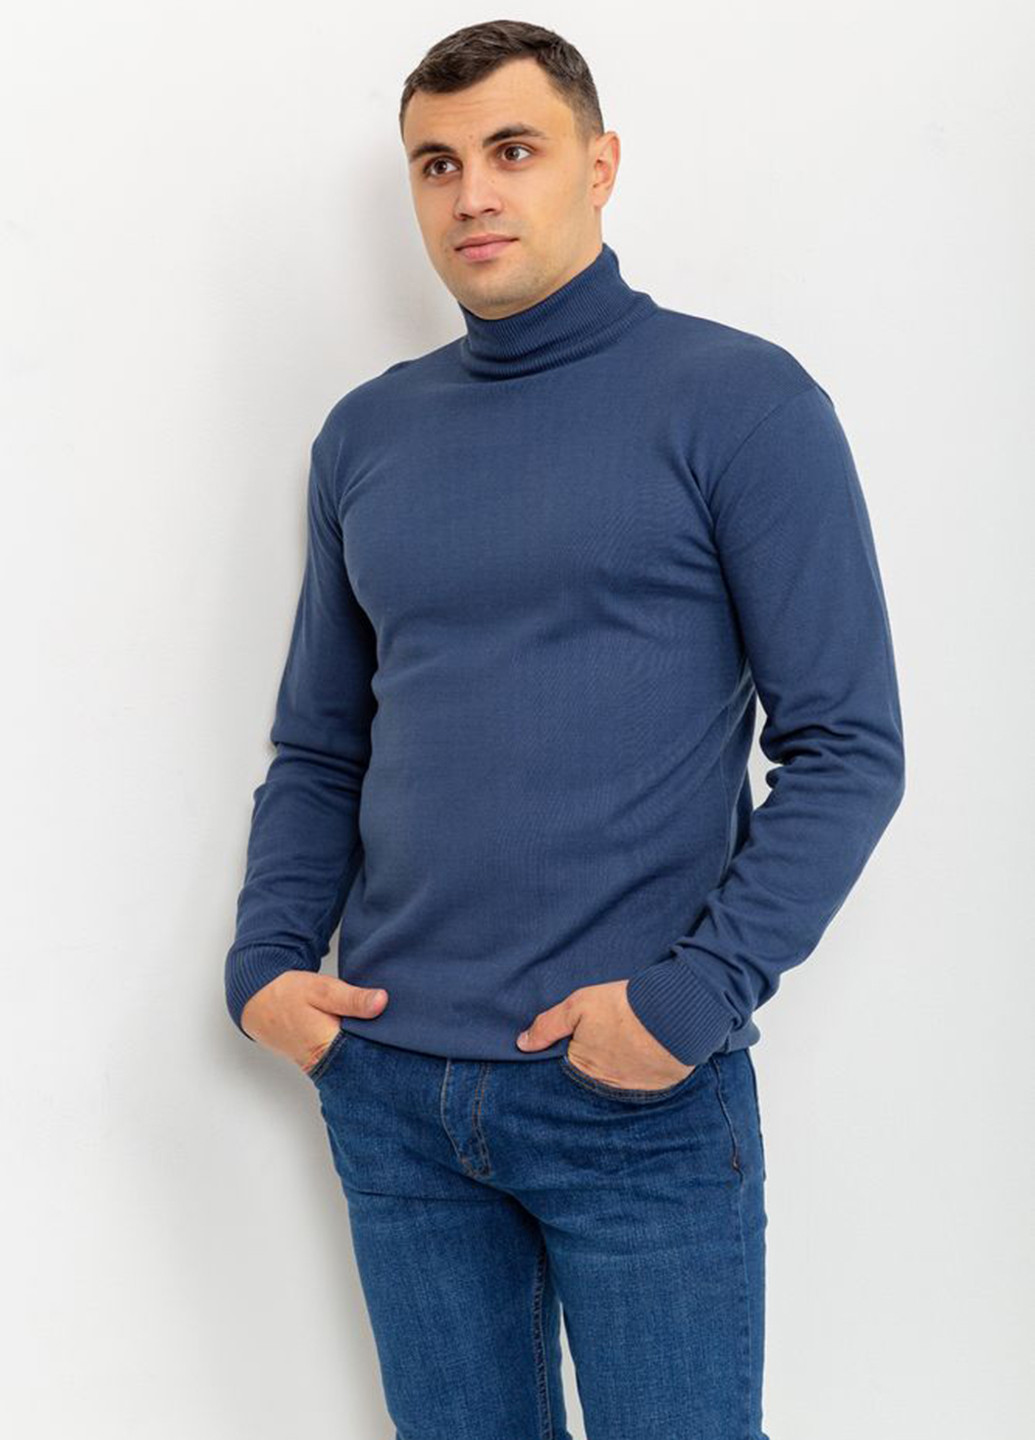 Серо-синий демисезонный свитер Ager